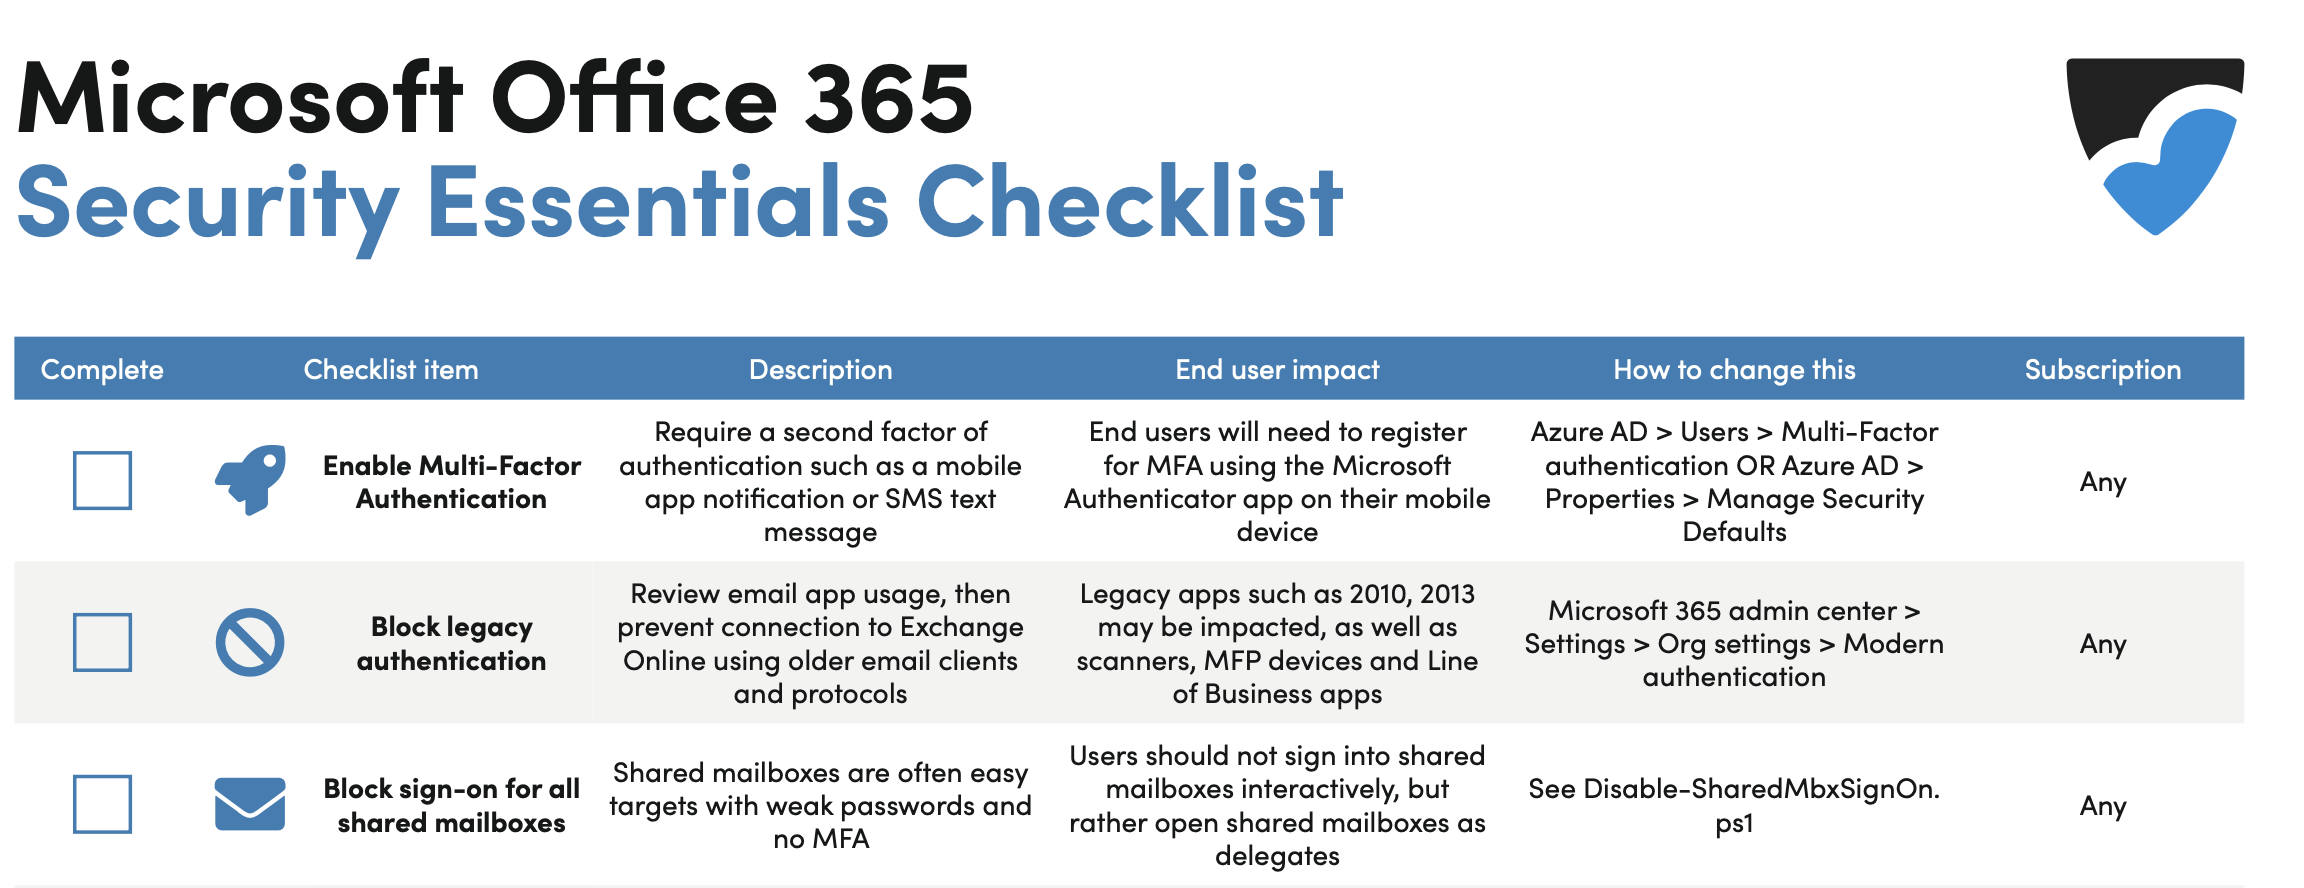 Microsoft Office 365 Security Essentials Checklist